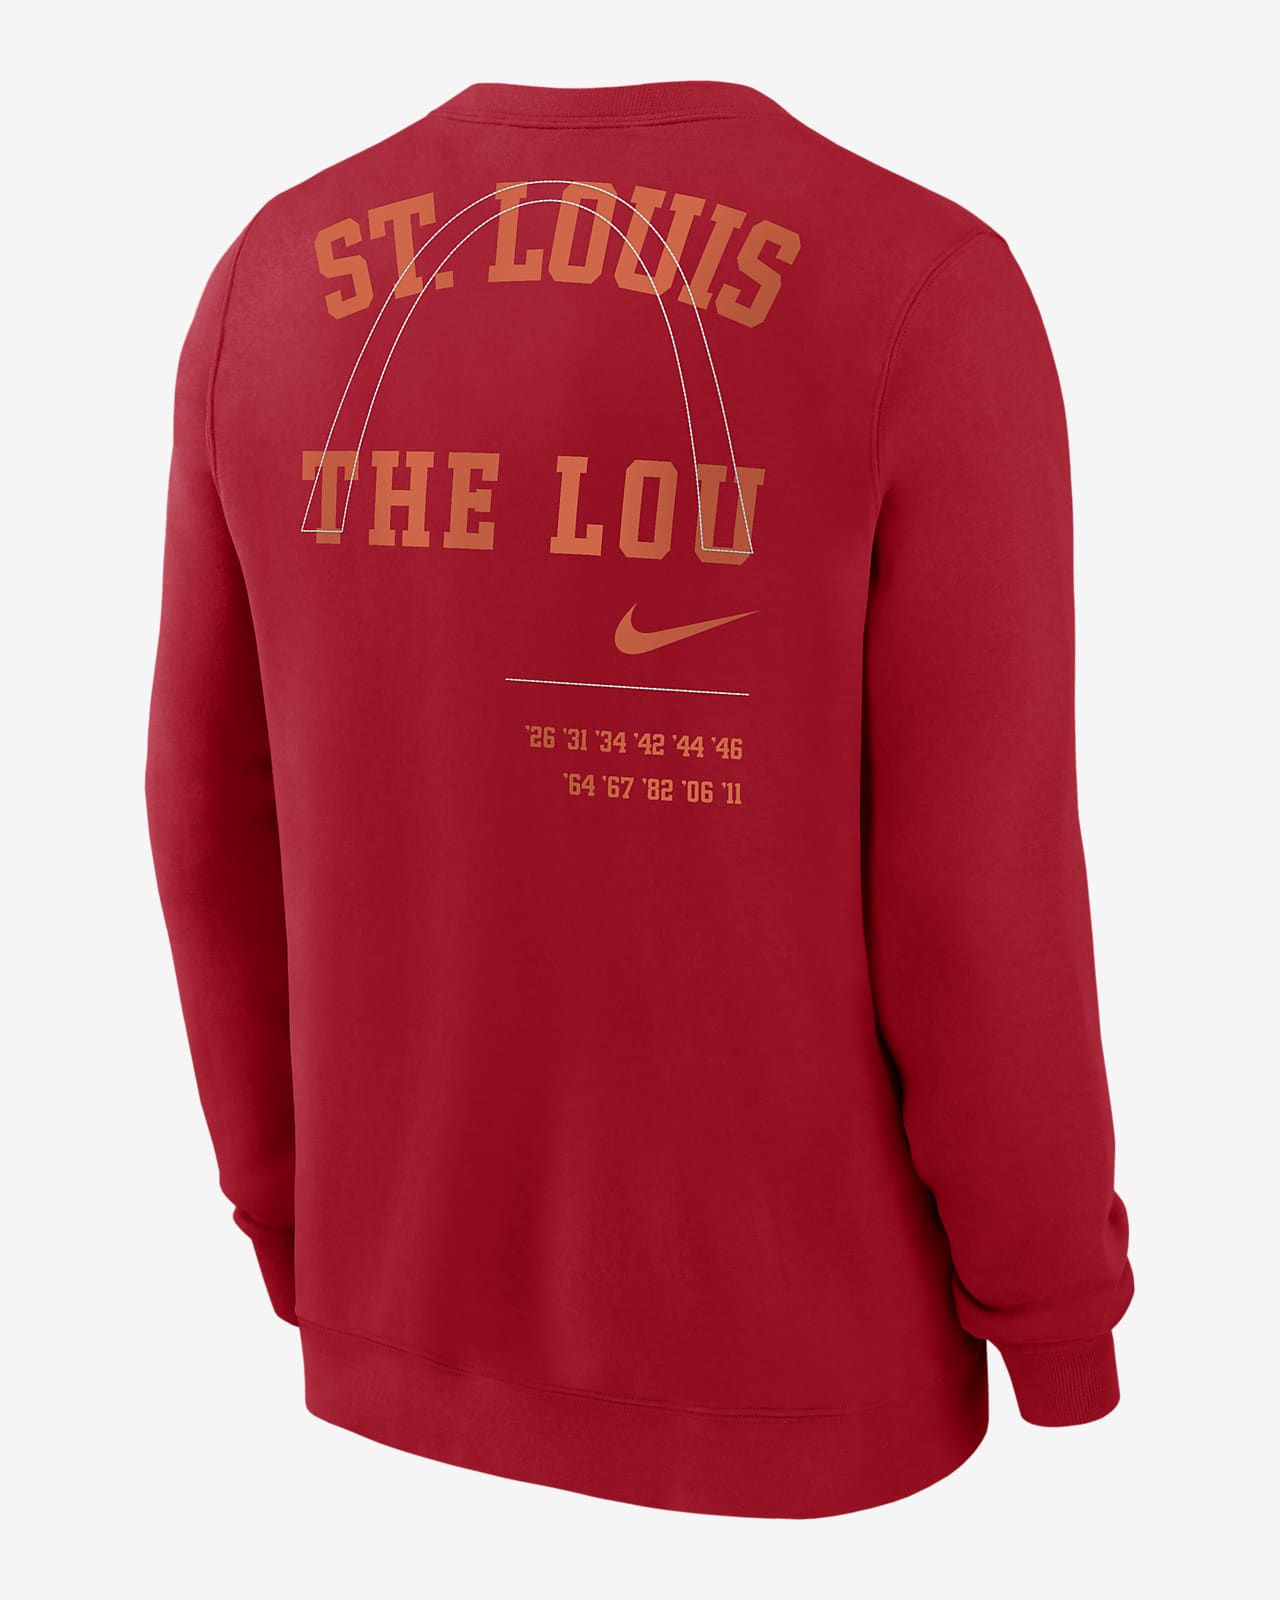 St. Louis Cardinals Youth RedThe Lou T-Shirt